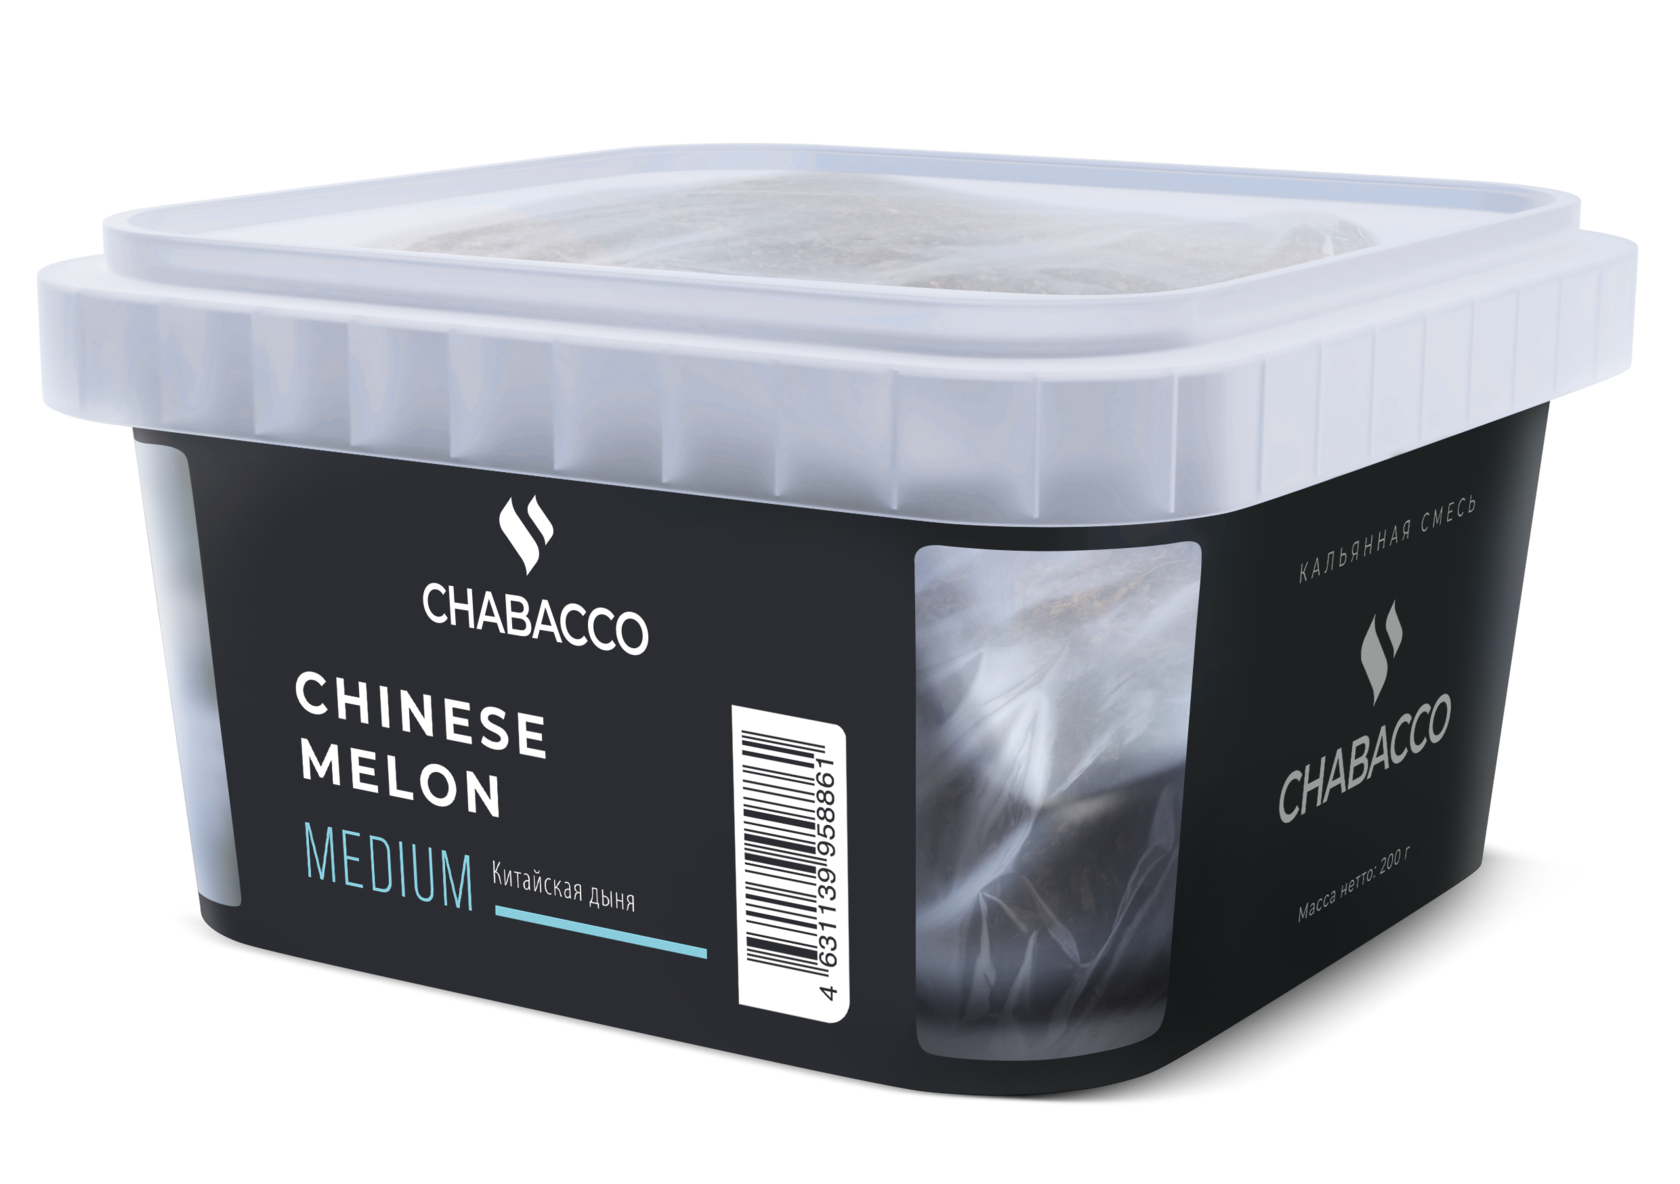 Chabacco - Medium - CHINESE MELON - 200 g